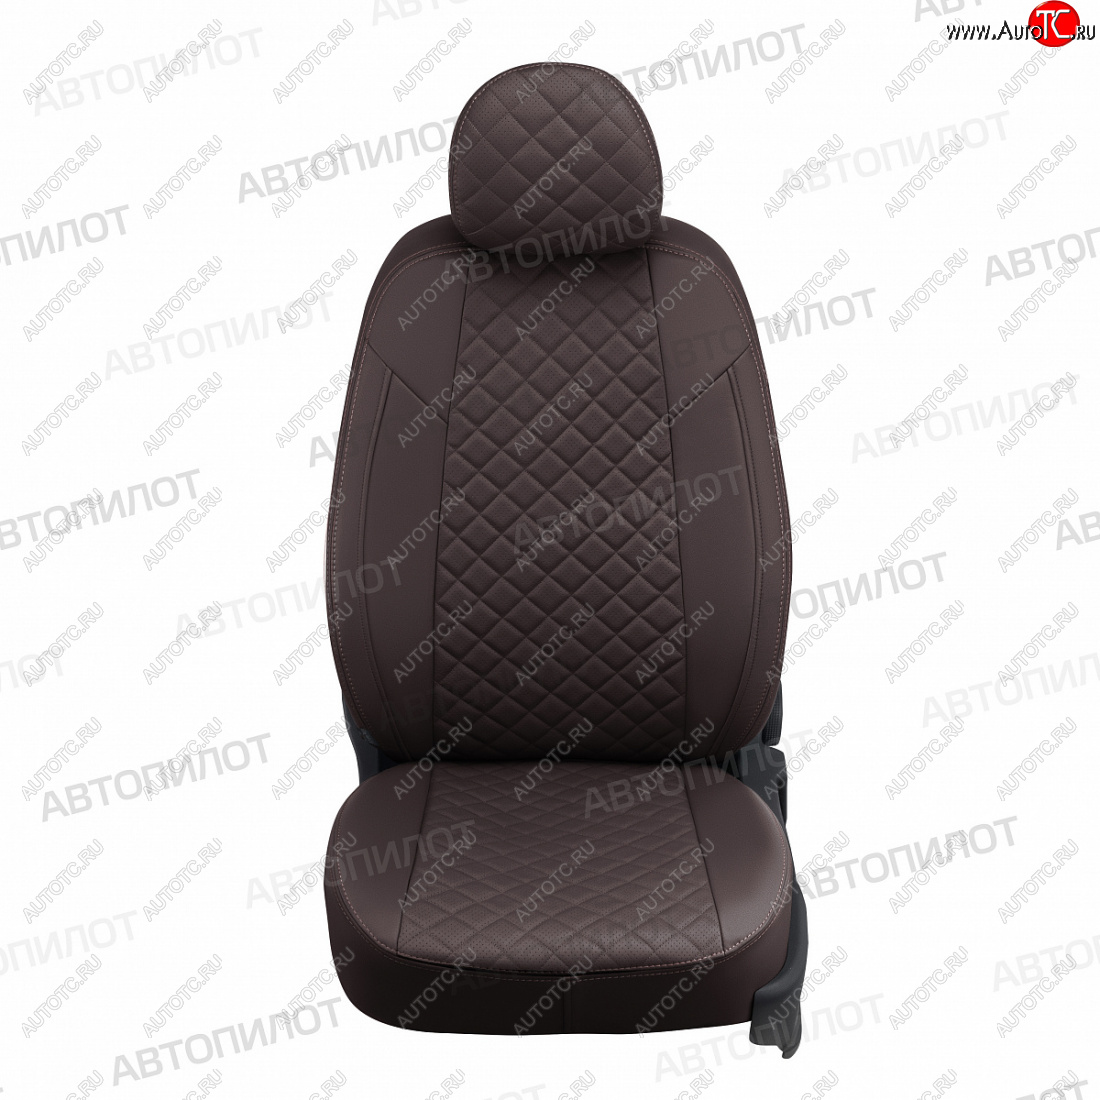 7 799 р. Чехлы сидений (экокожа, зад. сид. 40/60) Автопилот Ромб  Hyundai Getz  TB (2002-2010) (шоколад)